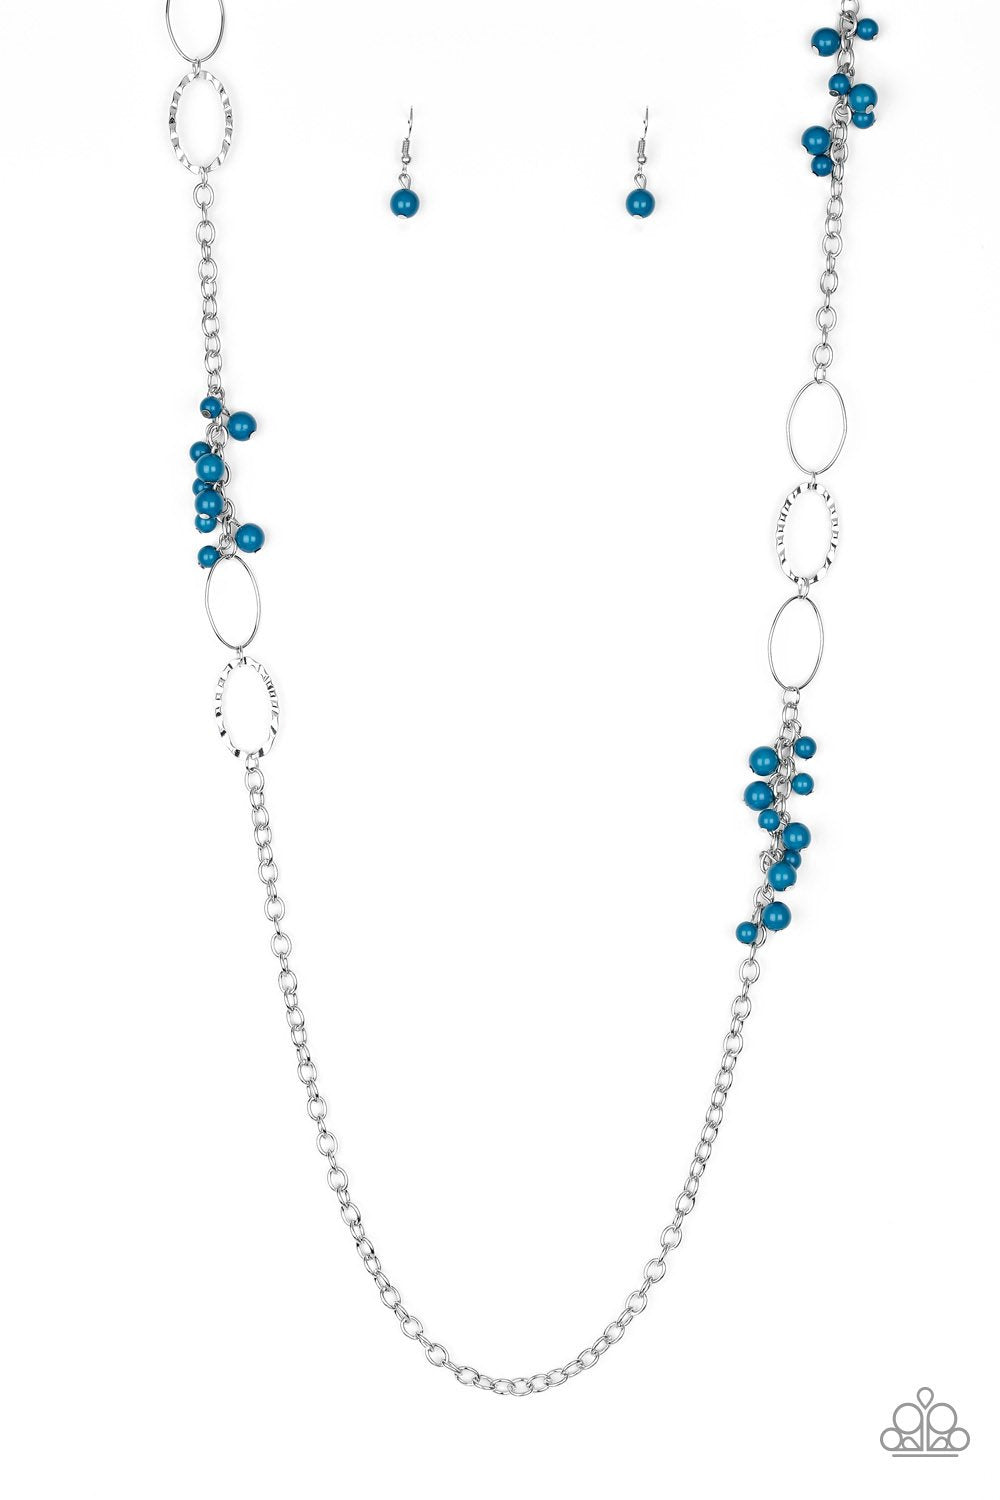 Flirtly Foxtrot Blue Necklace freeshipping - JewLz4u Gemstone Gallery